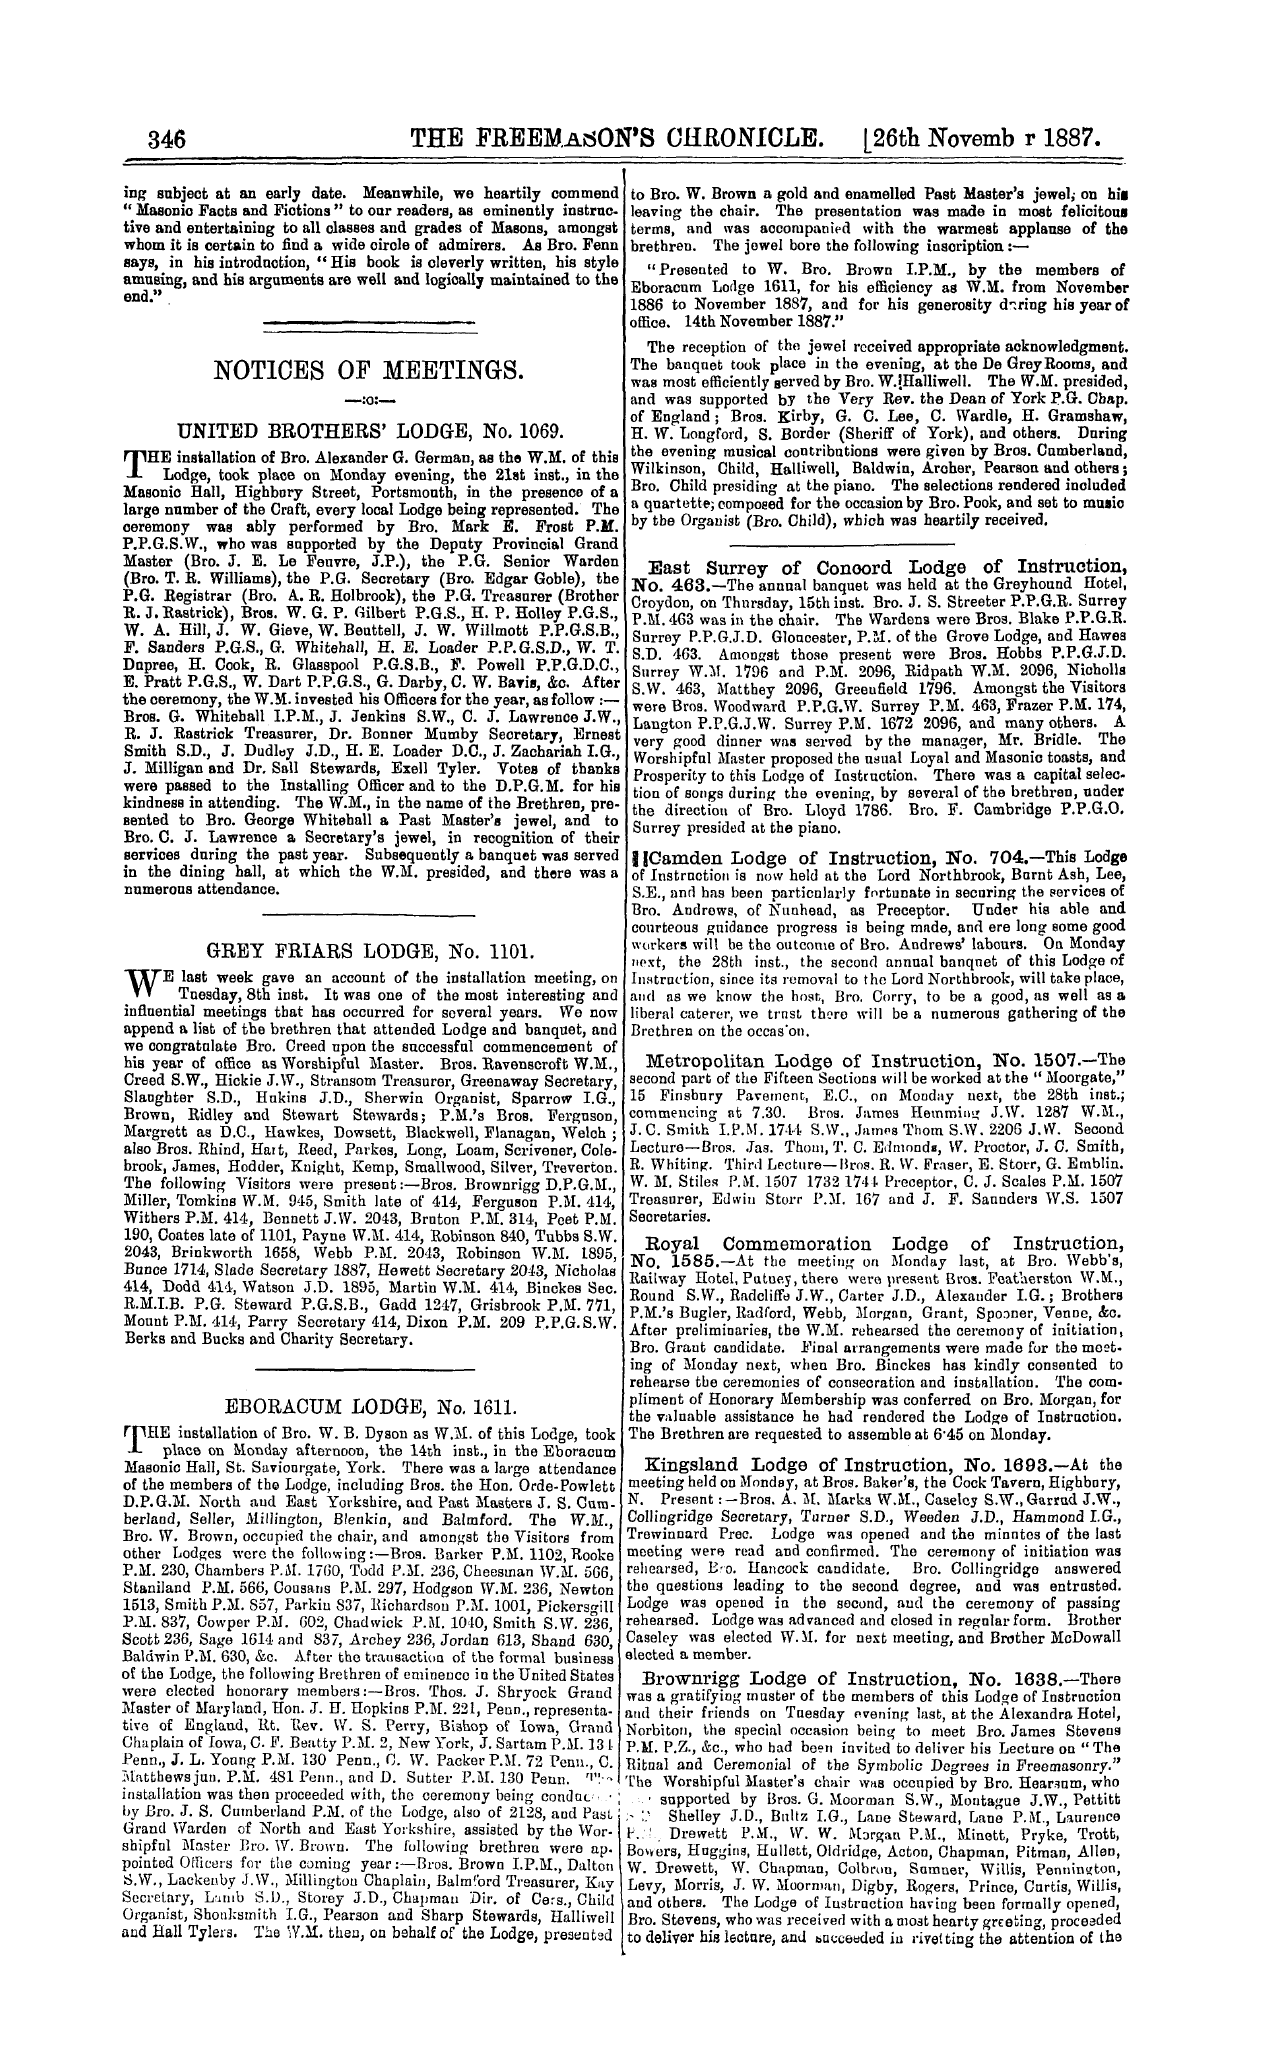 The Freemason's Chronicle: 1887-11-26 - Reviews.